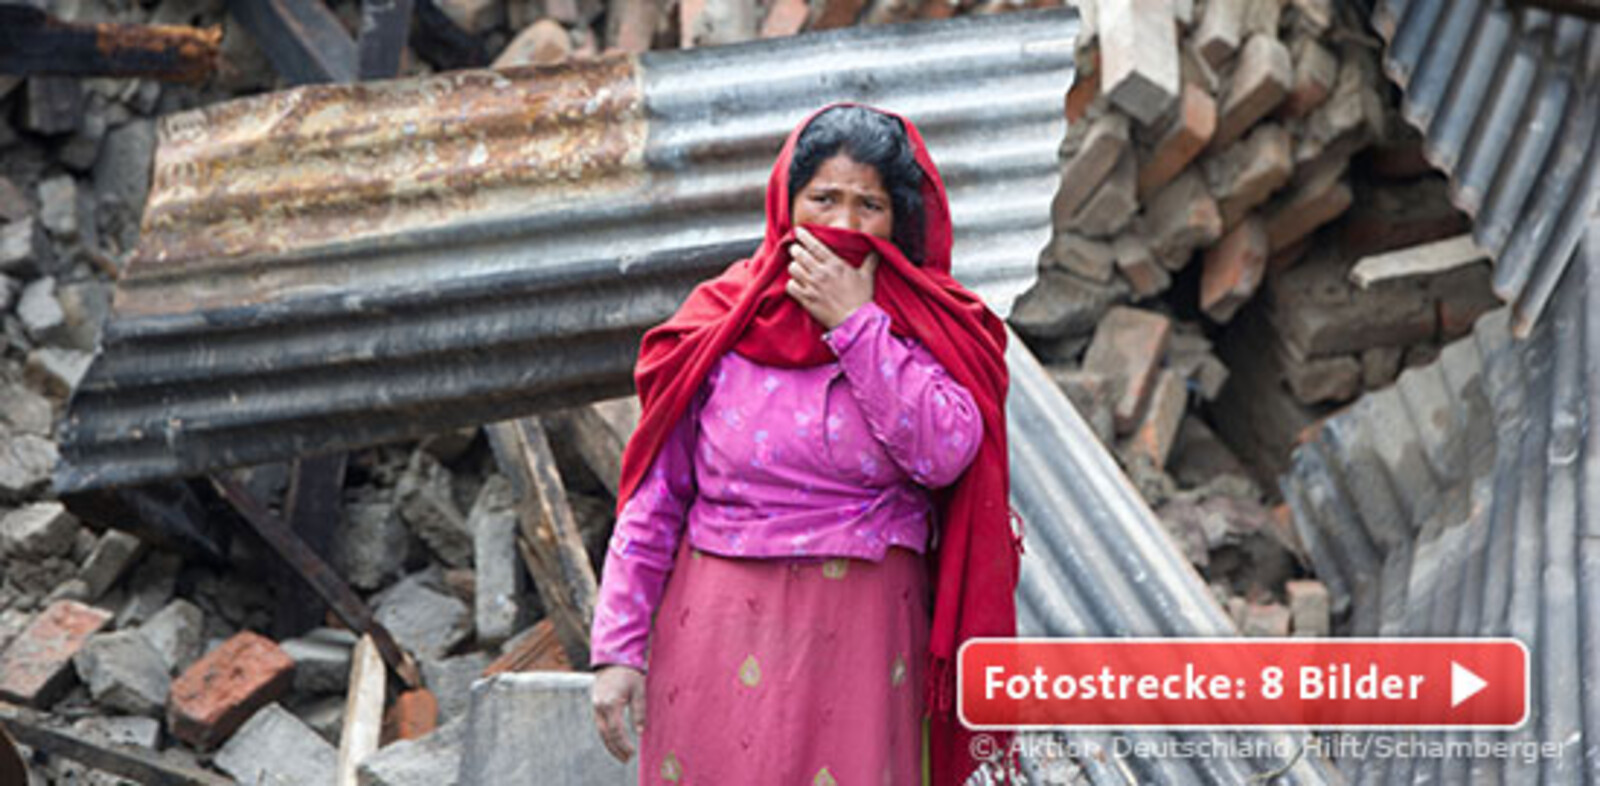 Das Erdbeben in Nepal hat verheerende Schäden angerichtet